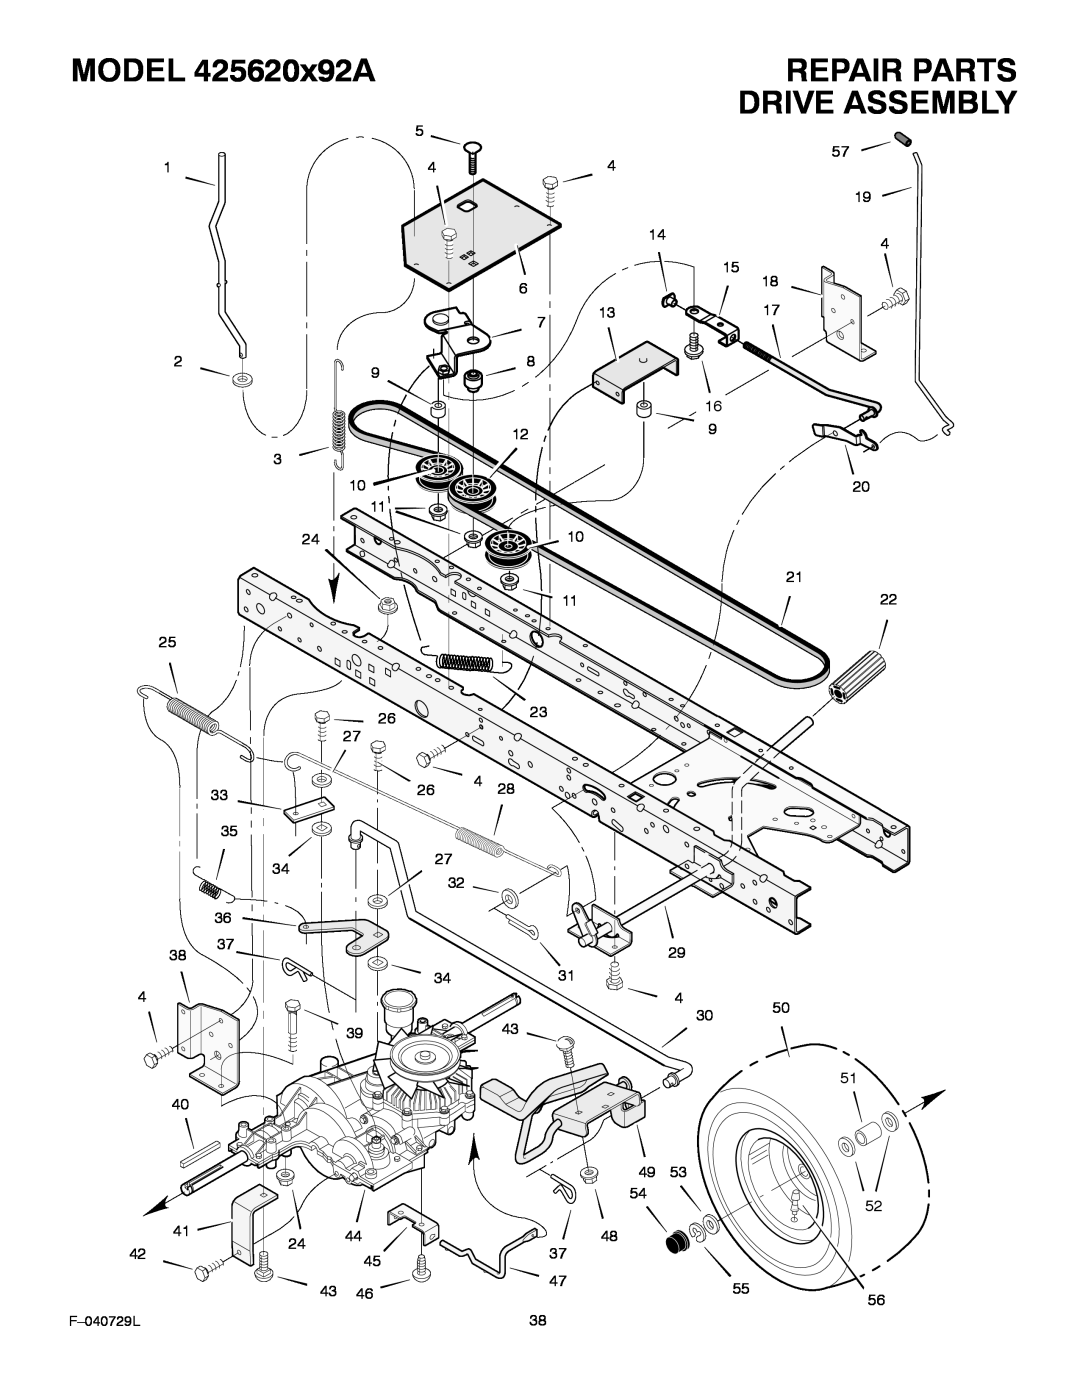 Murray manual Repair Parts Drive Assembly, MODEL 425620x92A, F-040729L 